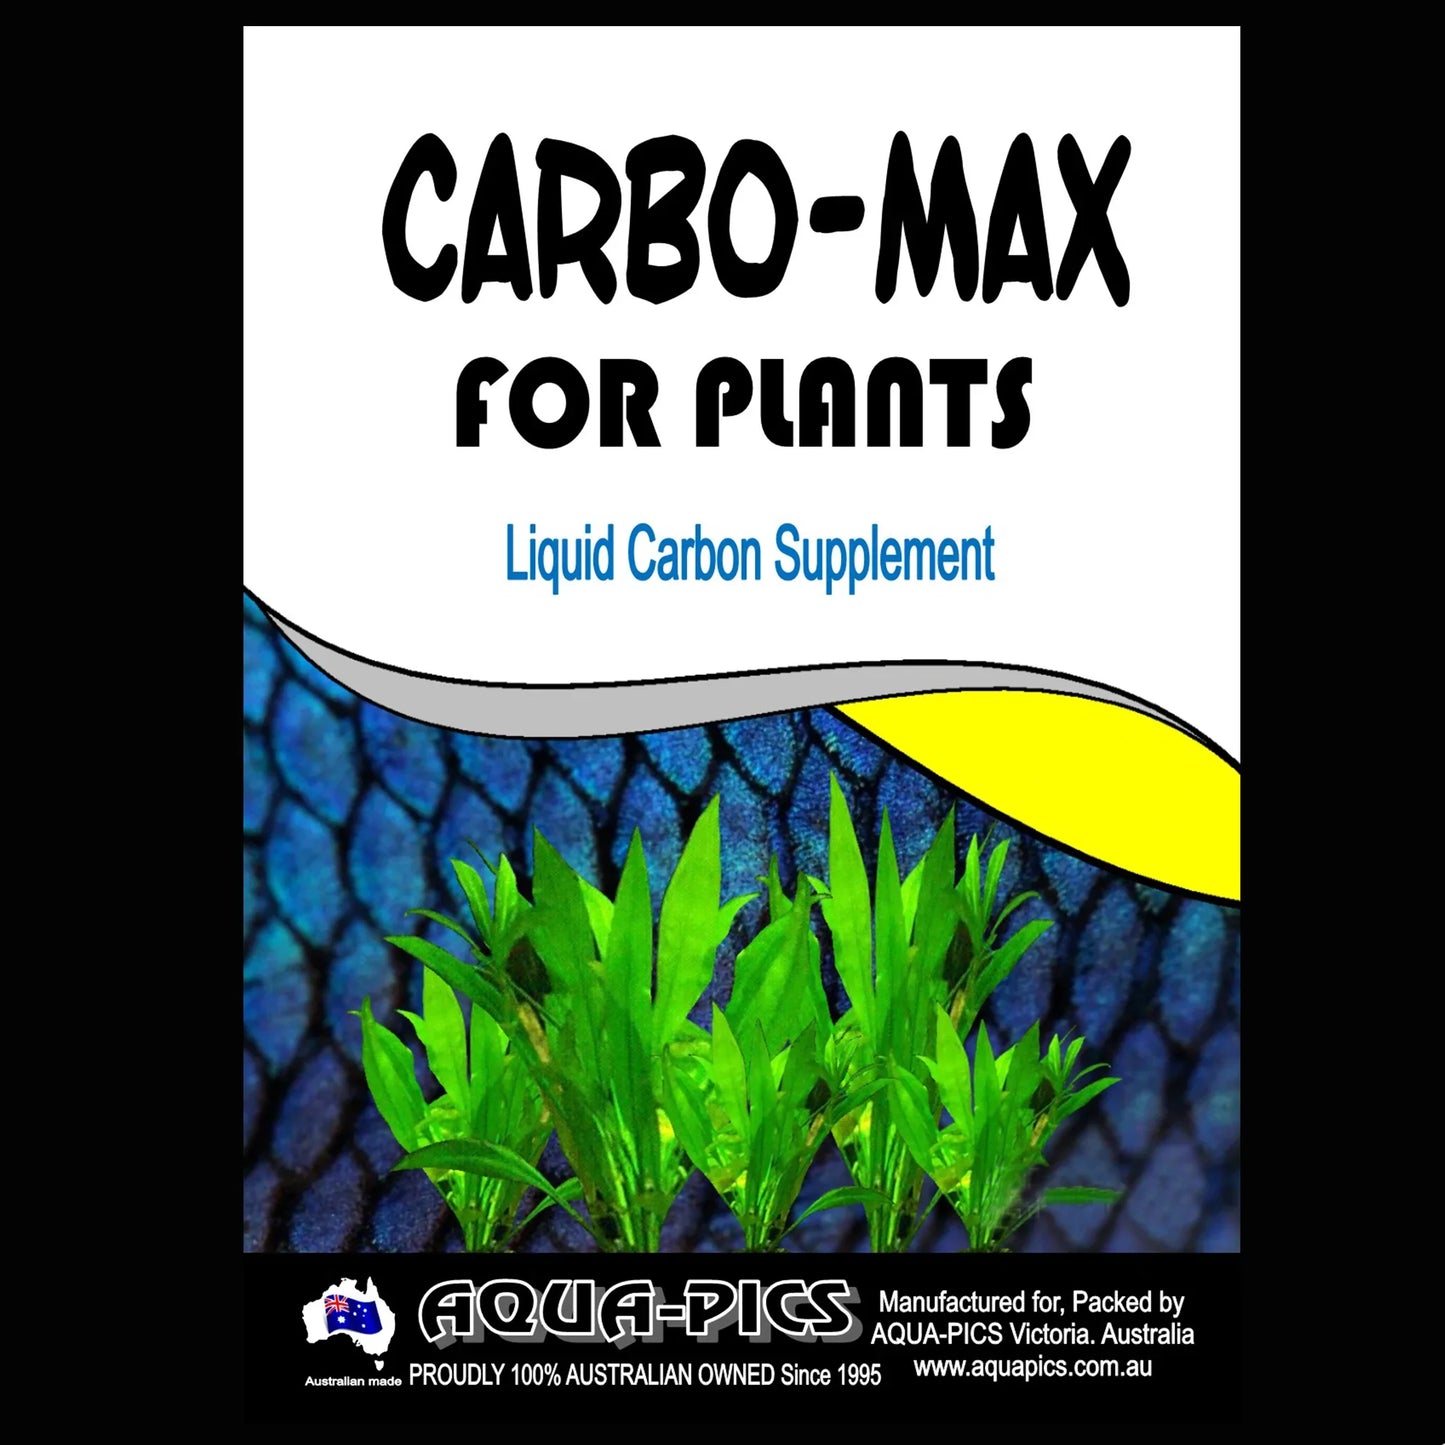 Carbo-Max Professional grade liquid carbon supplement 50ml